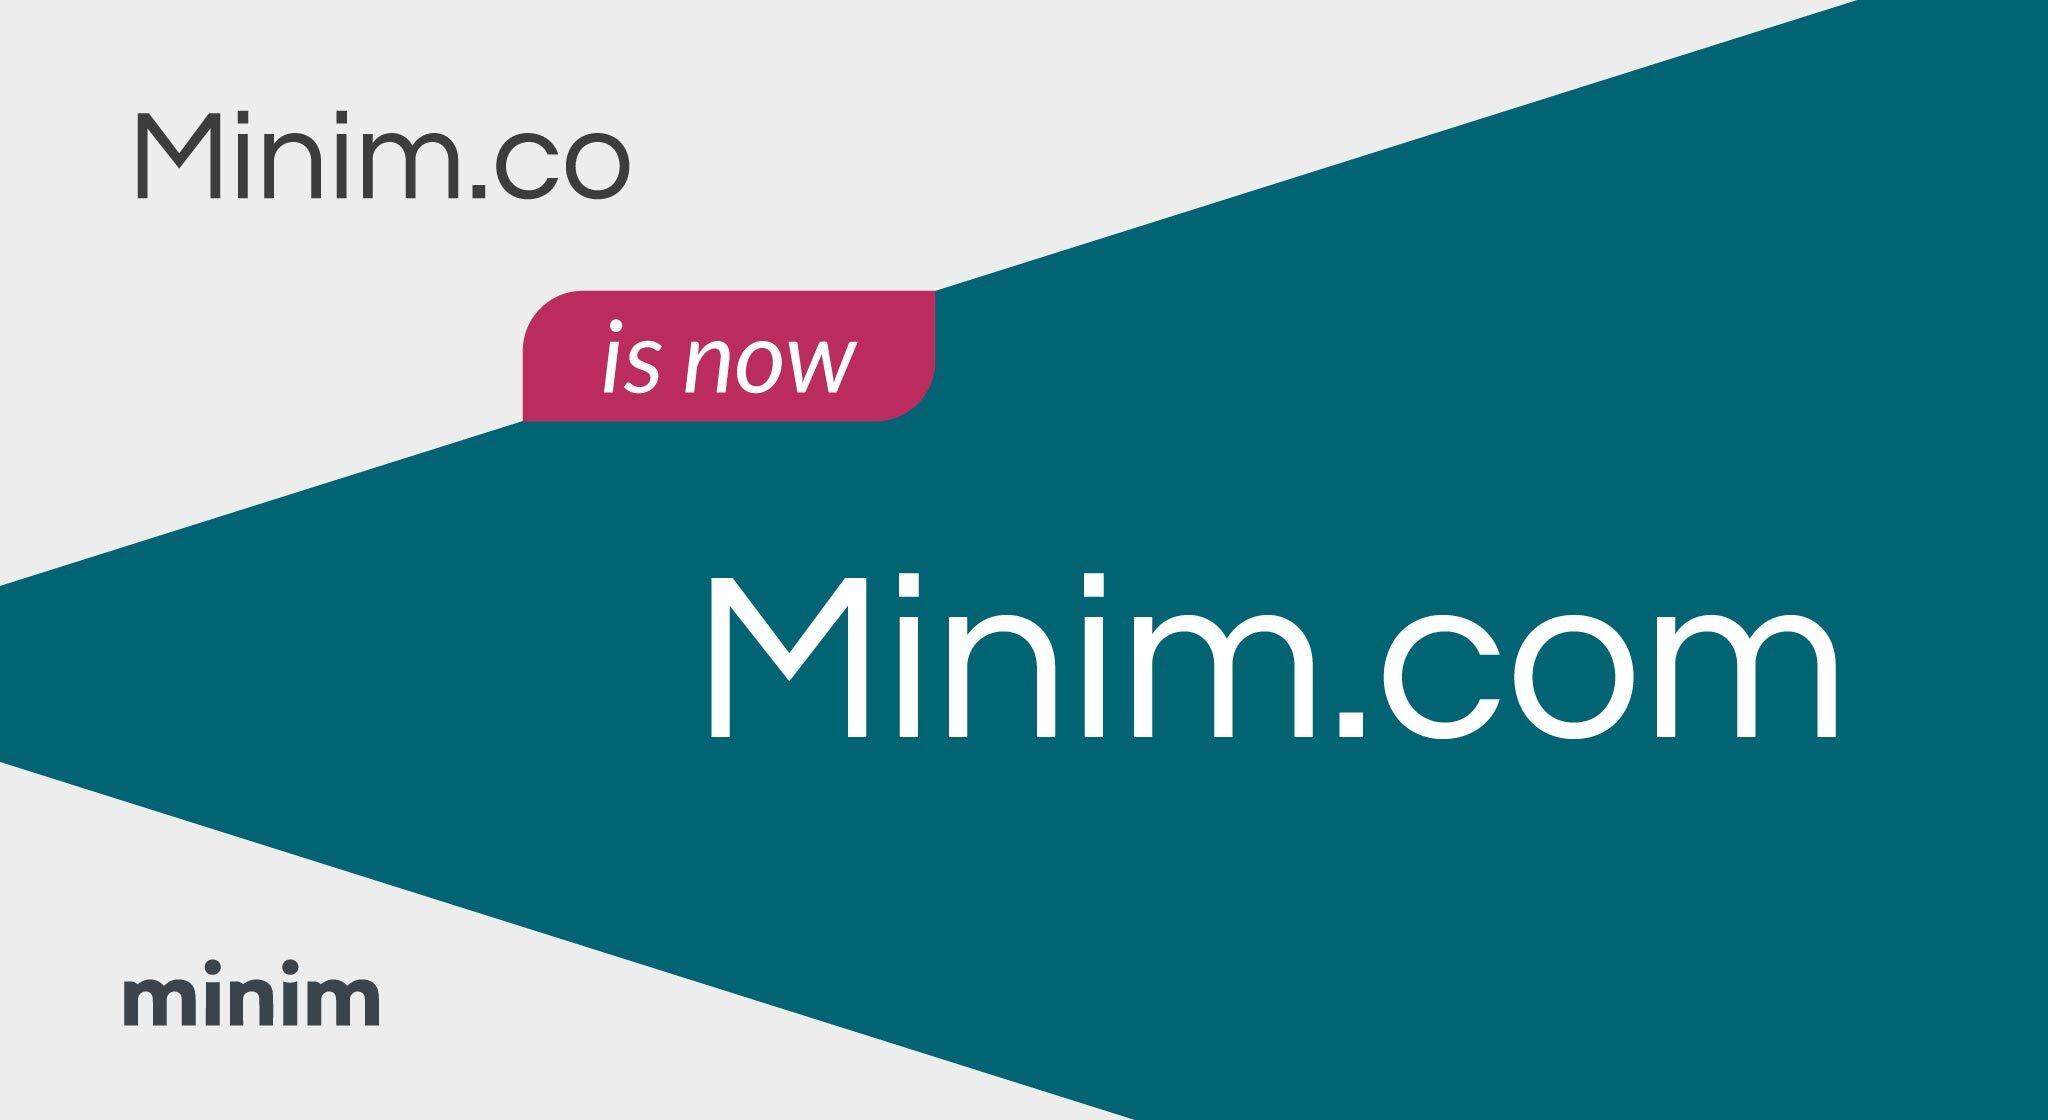 Introducing minim.com